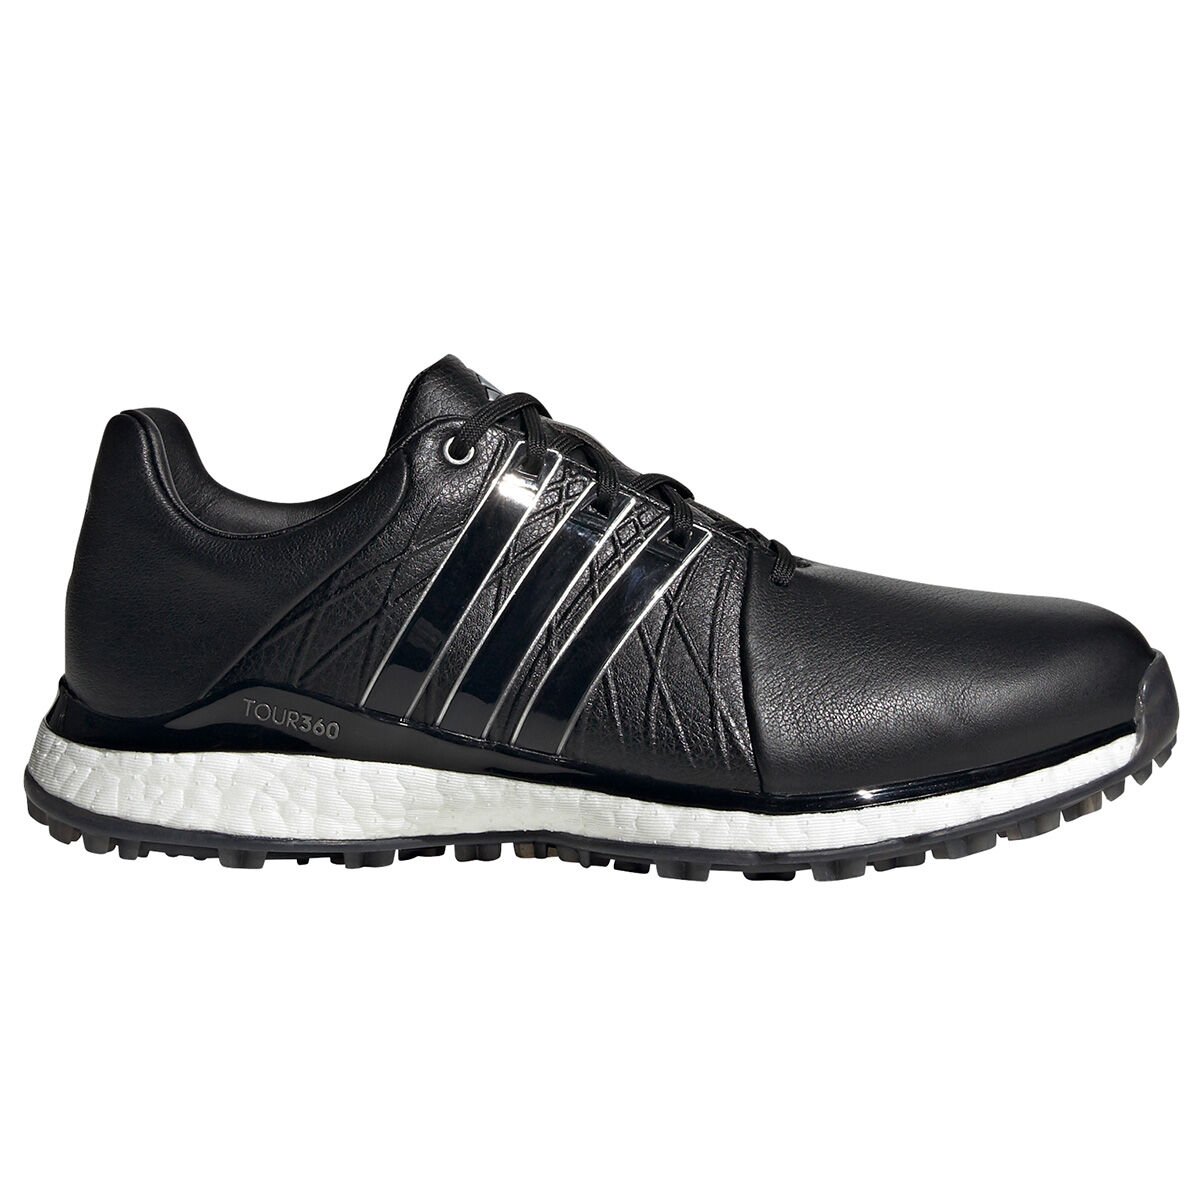 Chaussures adidas Golf Tour 360 XT-SL pour femmes, femme, 4, Noir/Argent/Noir | Online Golf